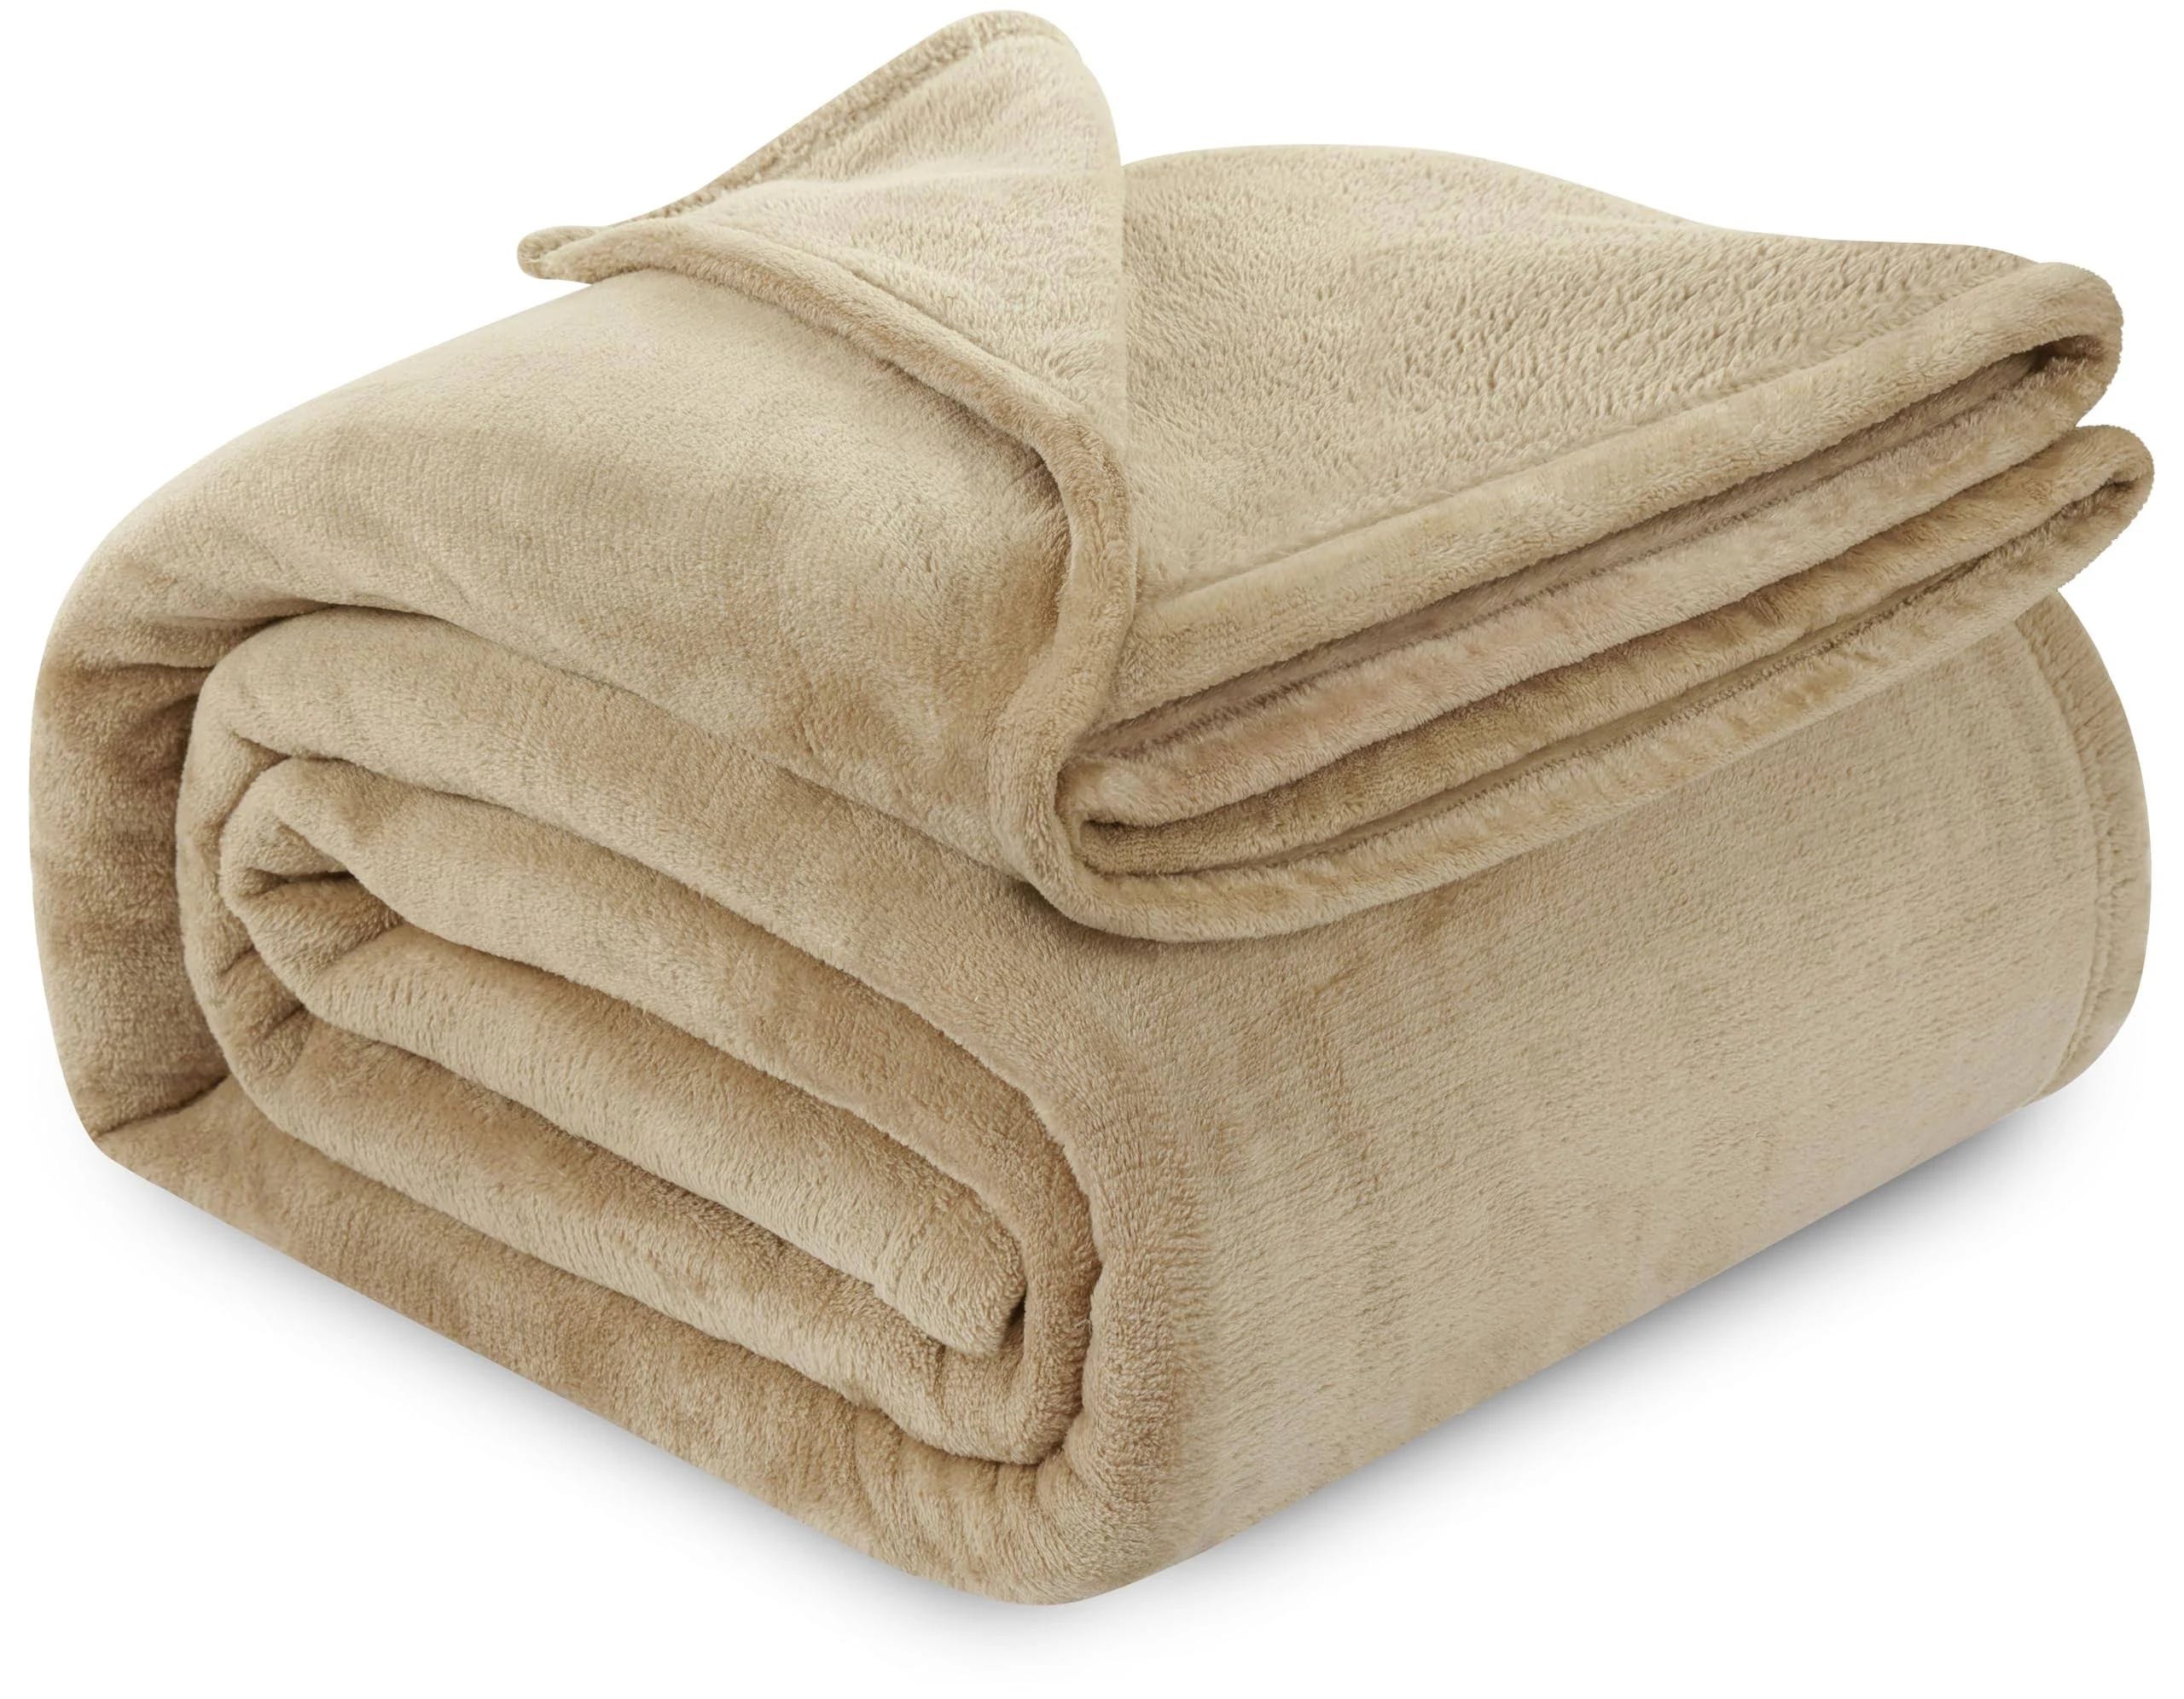 Soft, Lightweight Camel Fleece King-Sized Blanket | Image